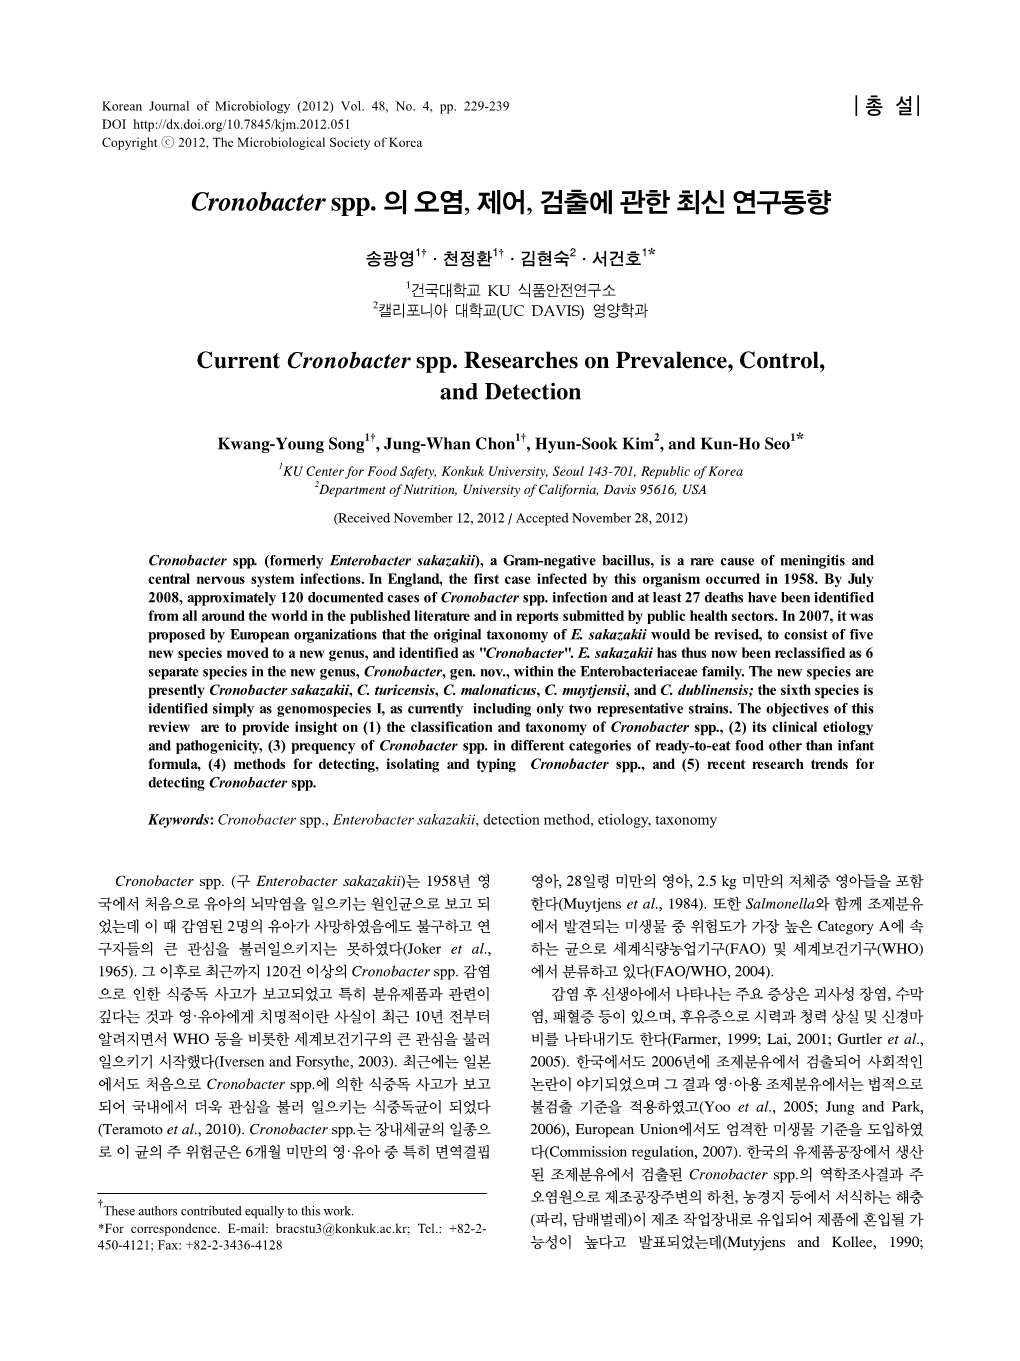 Cronobacter Spp. 의 오염, 제어, 검출에 관한 최신 연구동향